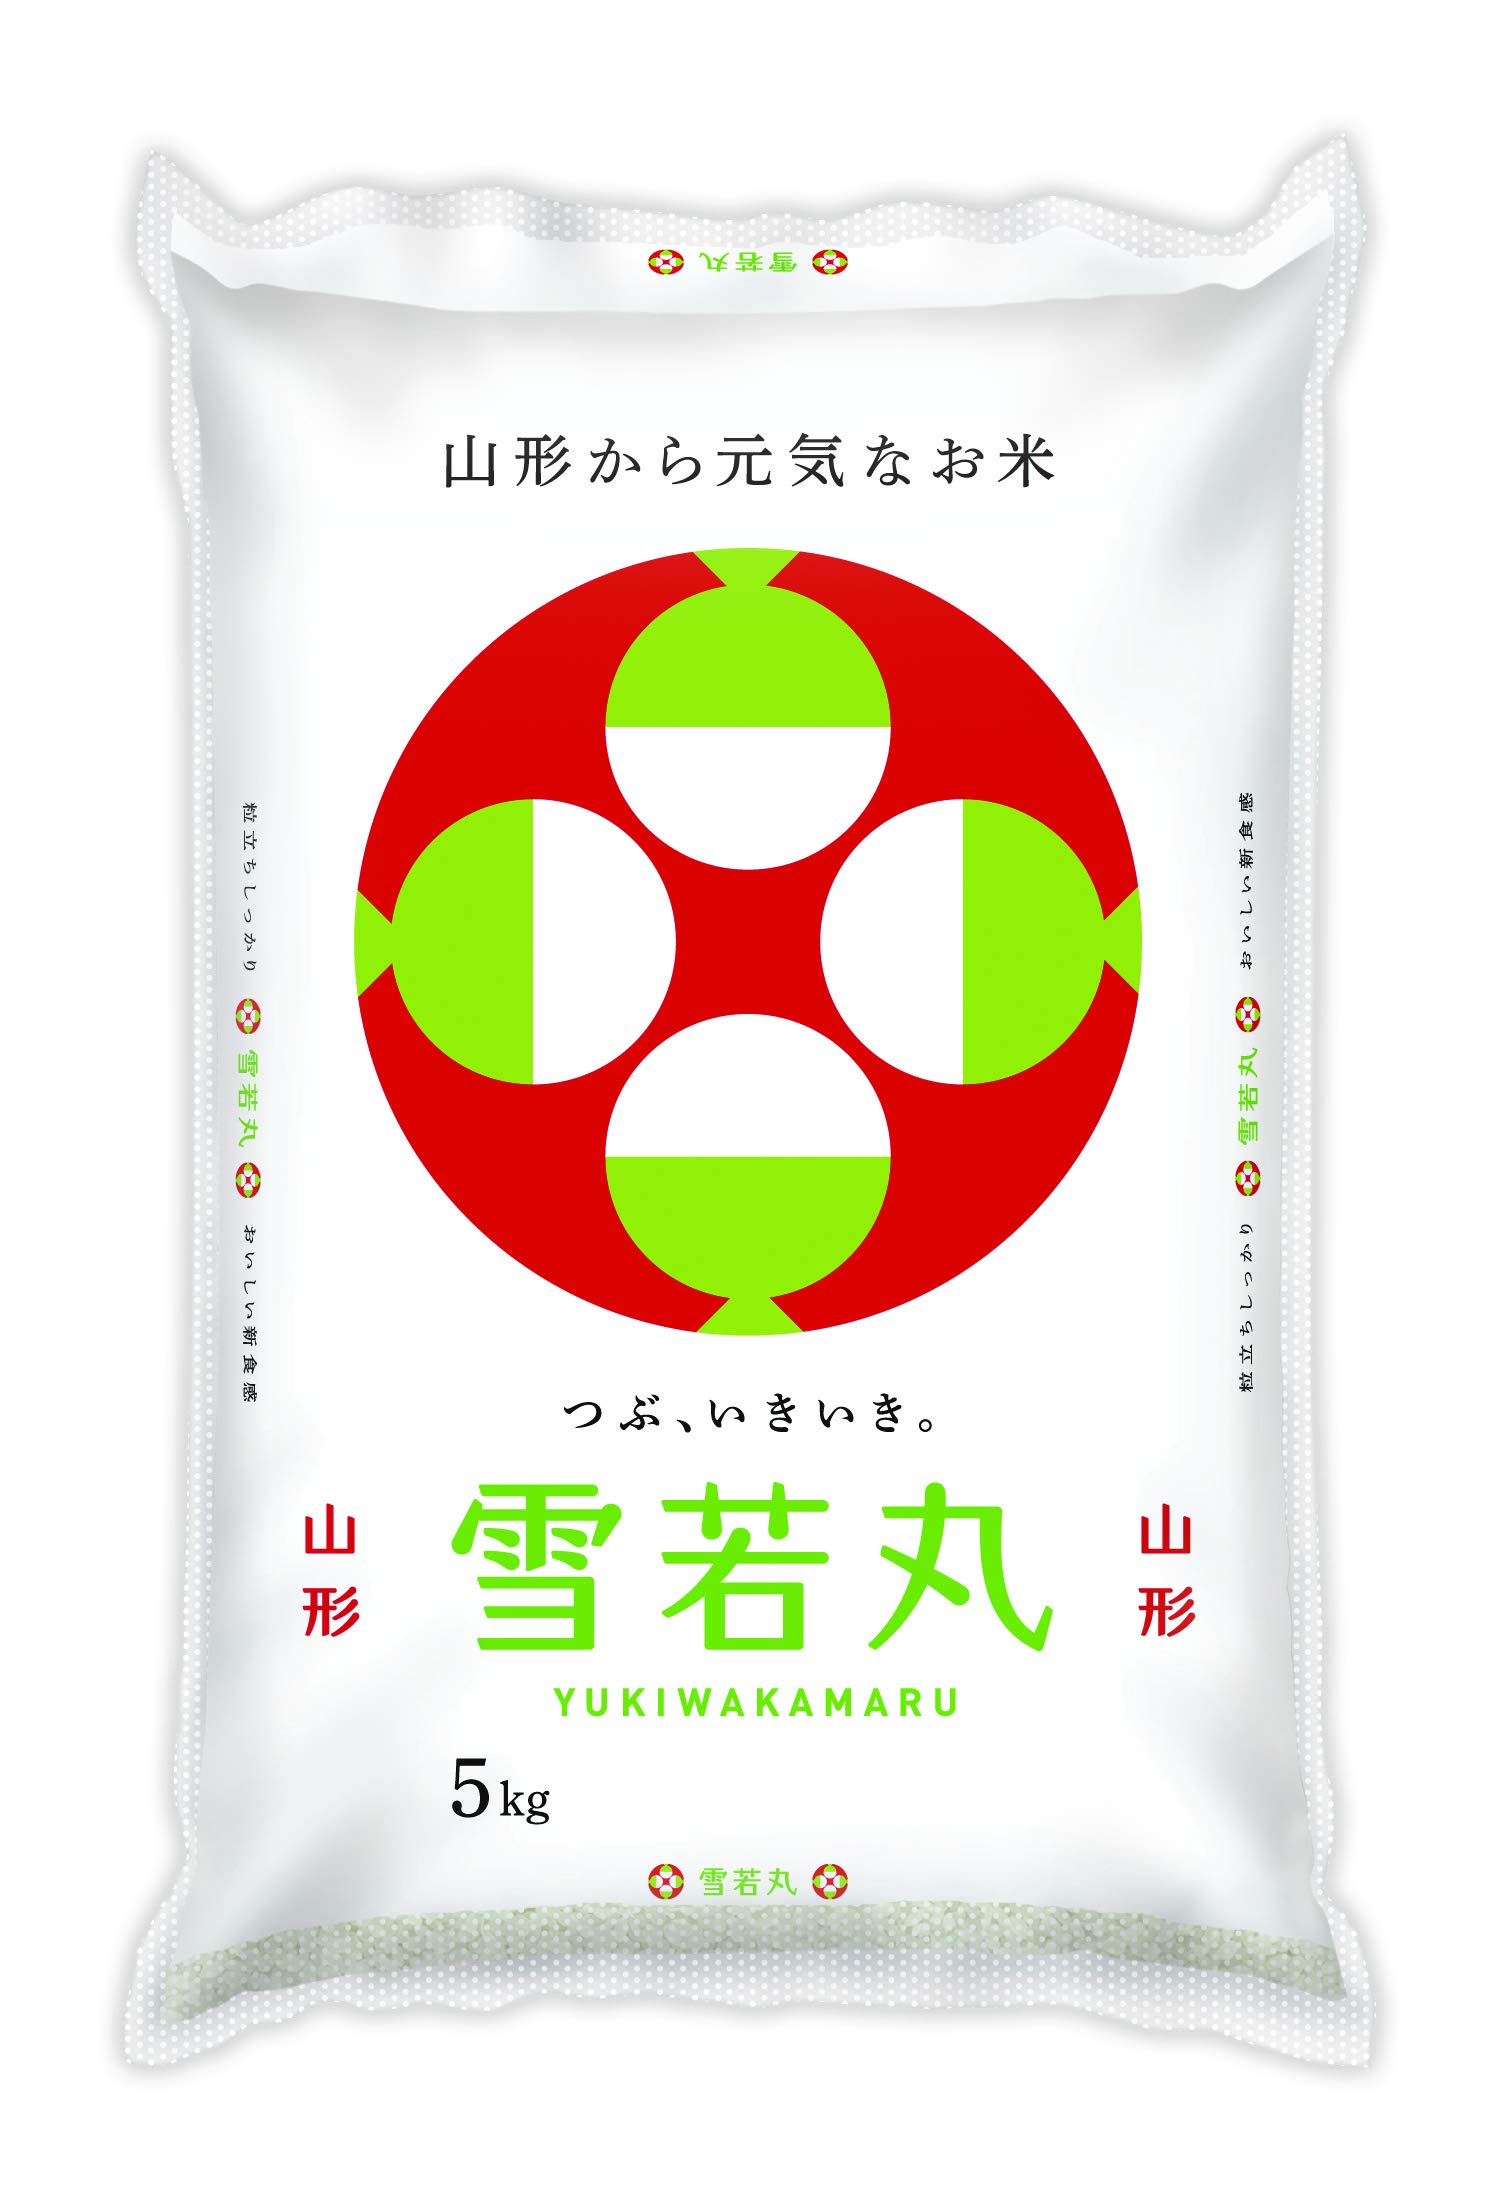 Top in Japan Ranking - Japanese Extremely Rare , Ultra Premium, Yamagata Yukiwakamaru White Rice, 山形米の新品種「雪若丸」Special Corp -【精米】山形県産 白米 雪若丸 (11 Pound)